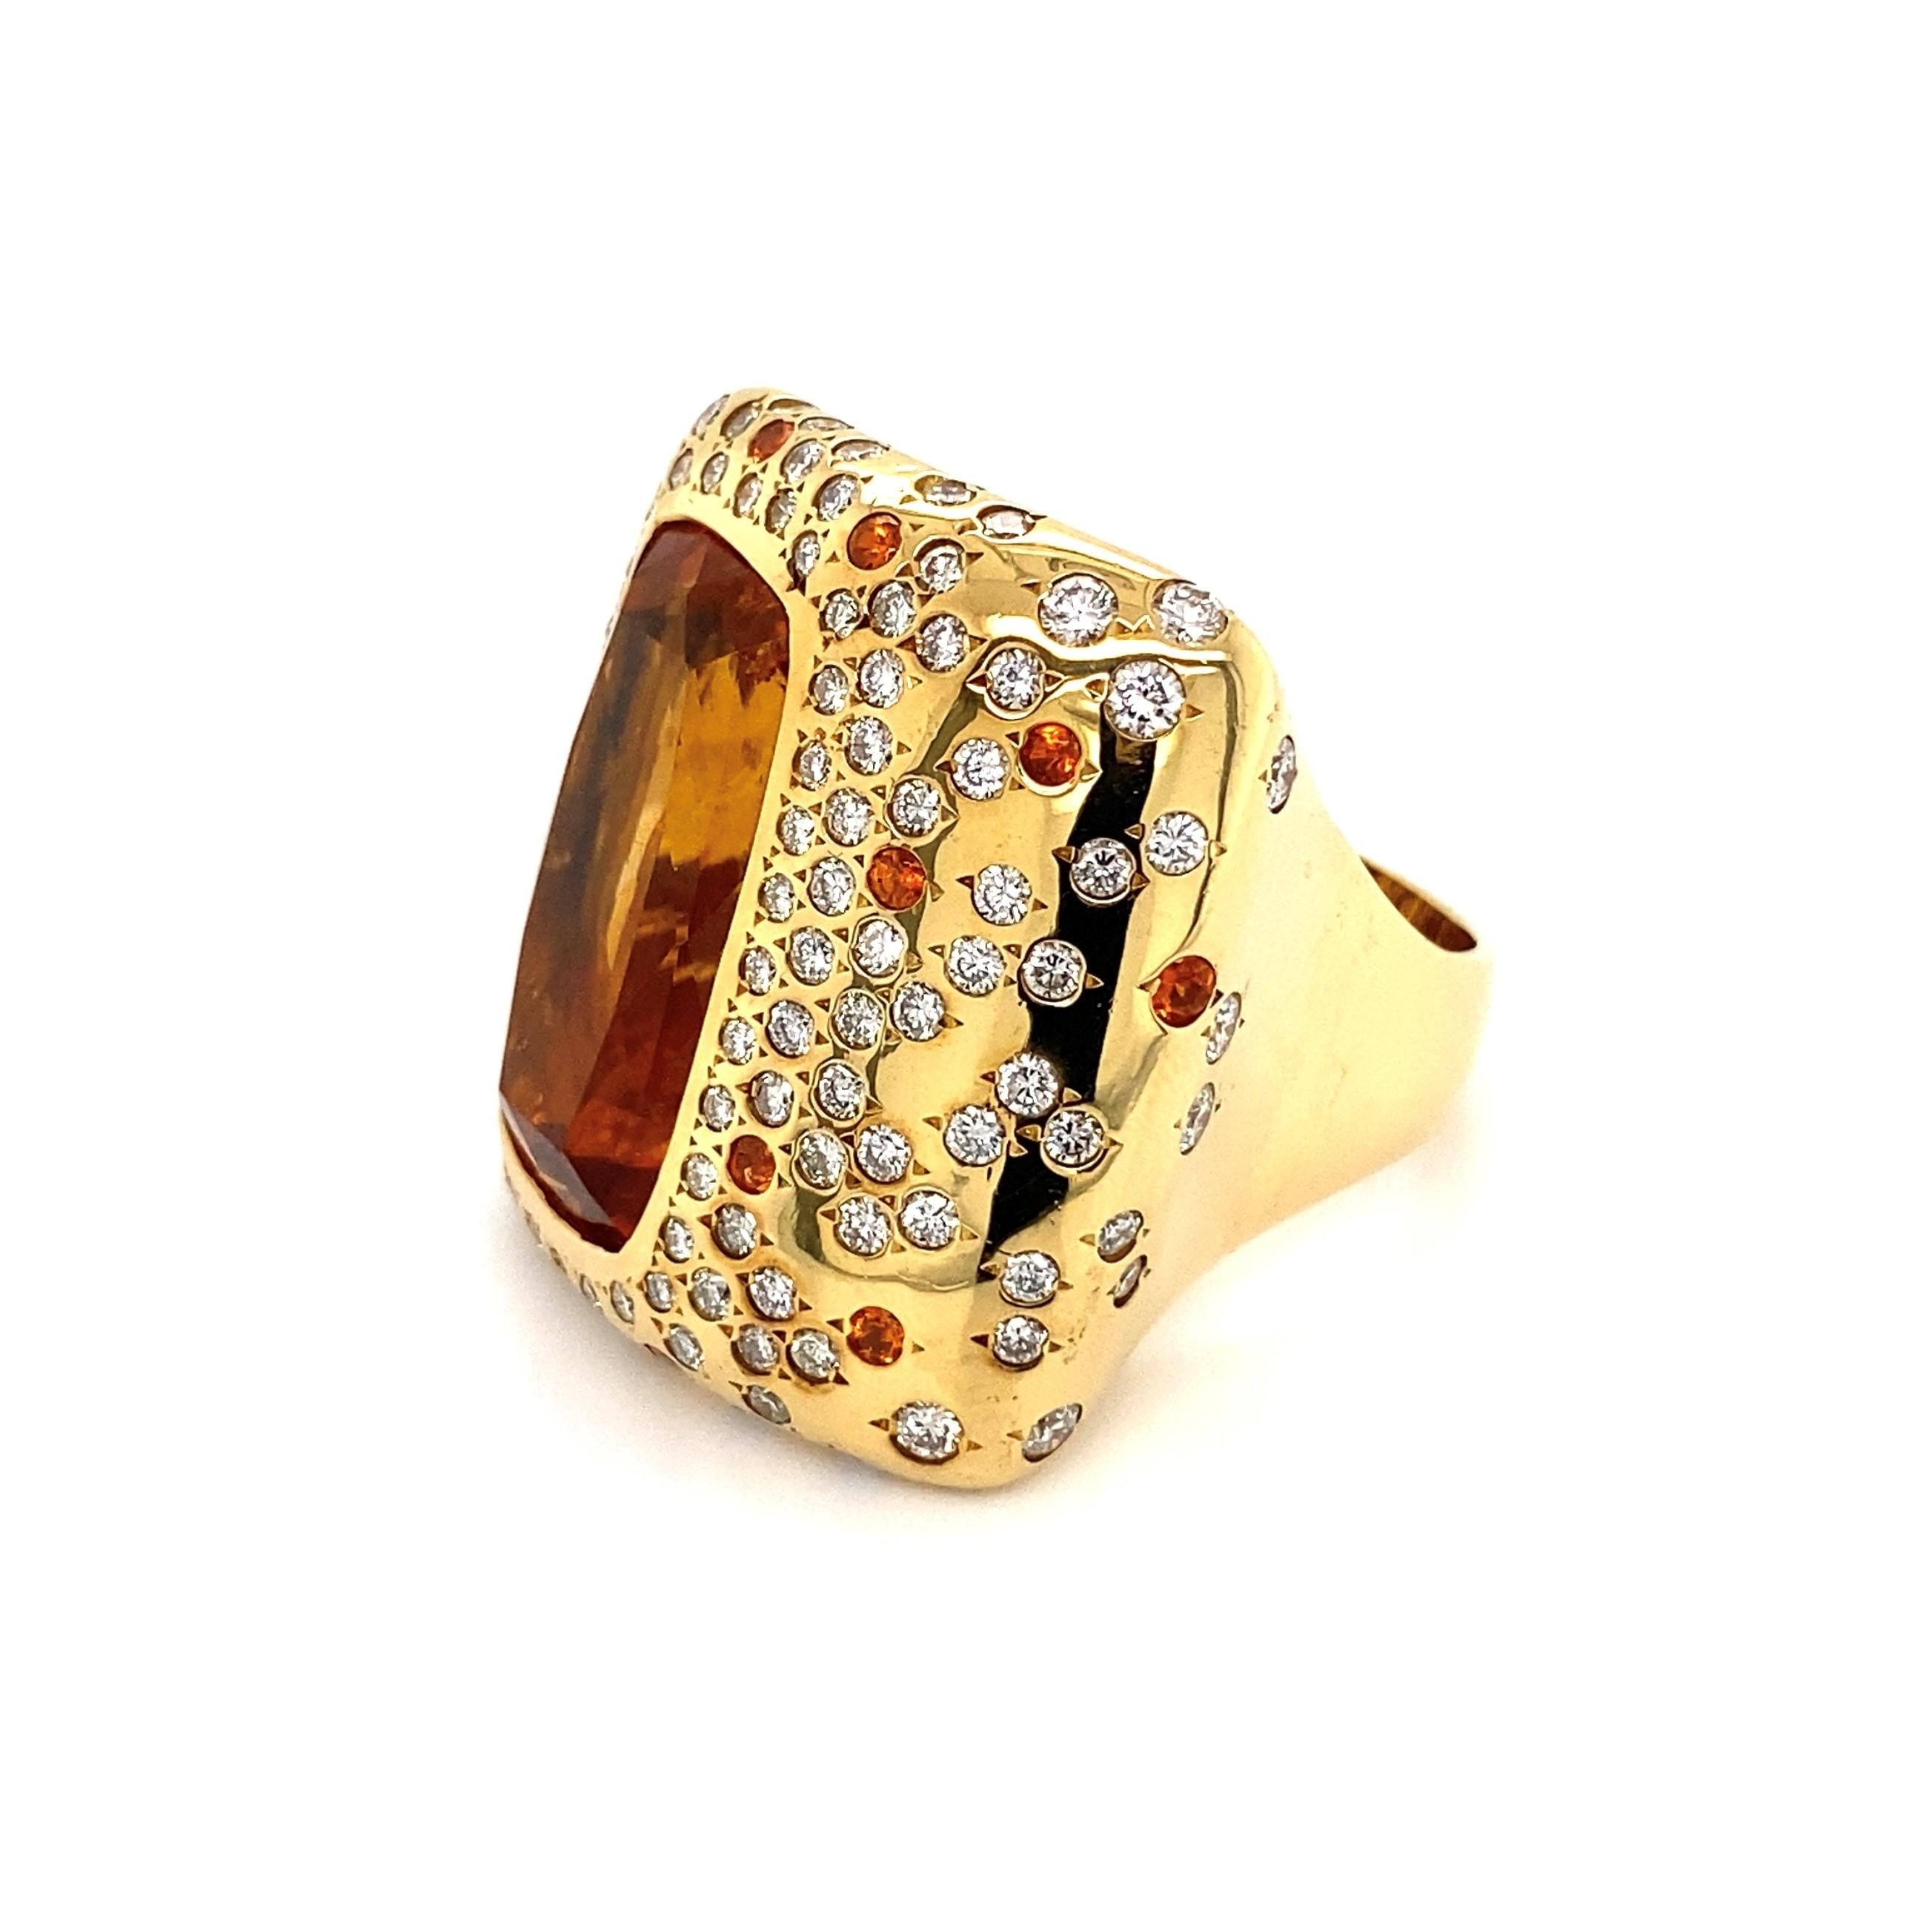 Mixed Cut 13.50 Carat Citrine Diamond and Spessartite Garnet Gold Ring Estate Fine Jewelry For Sale